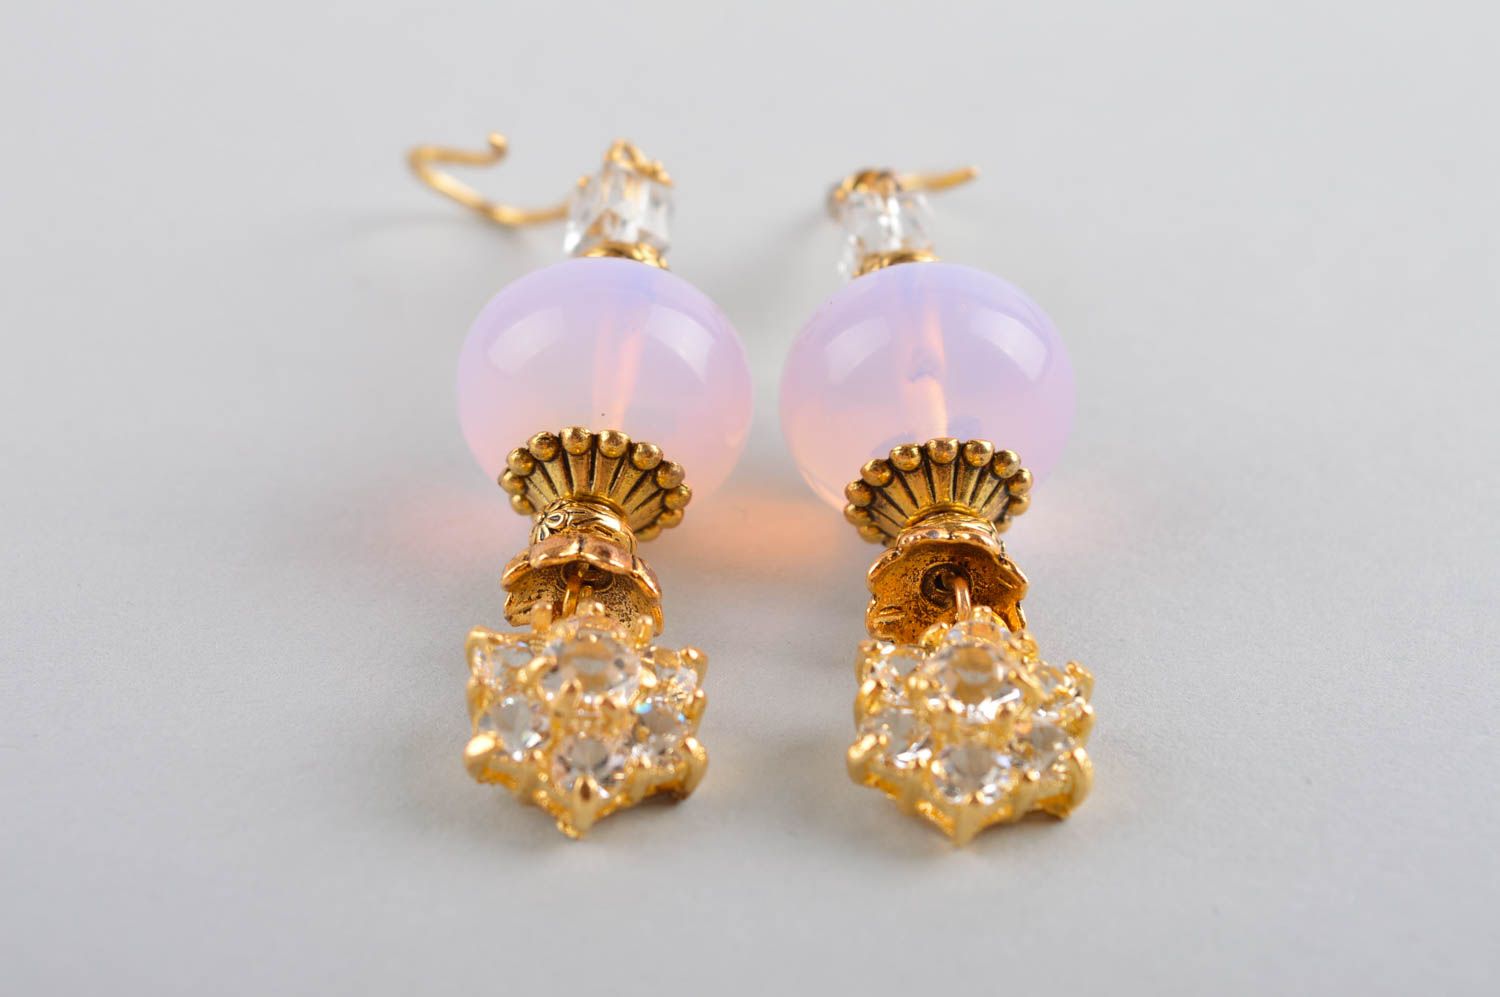 Handmade earrings designer jewelry handmade jewellery earrings for women photo 4